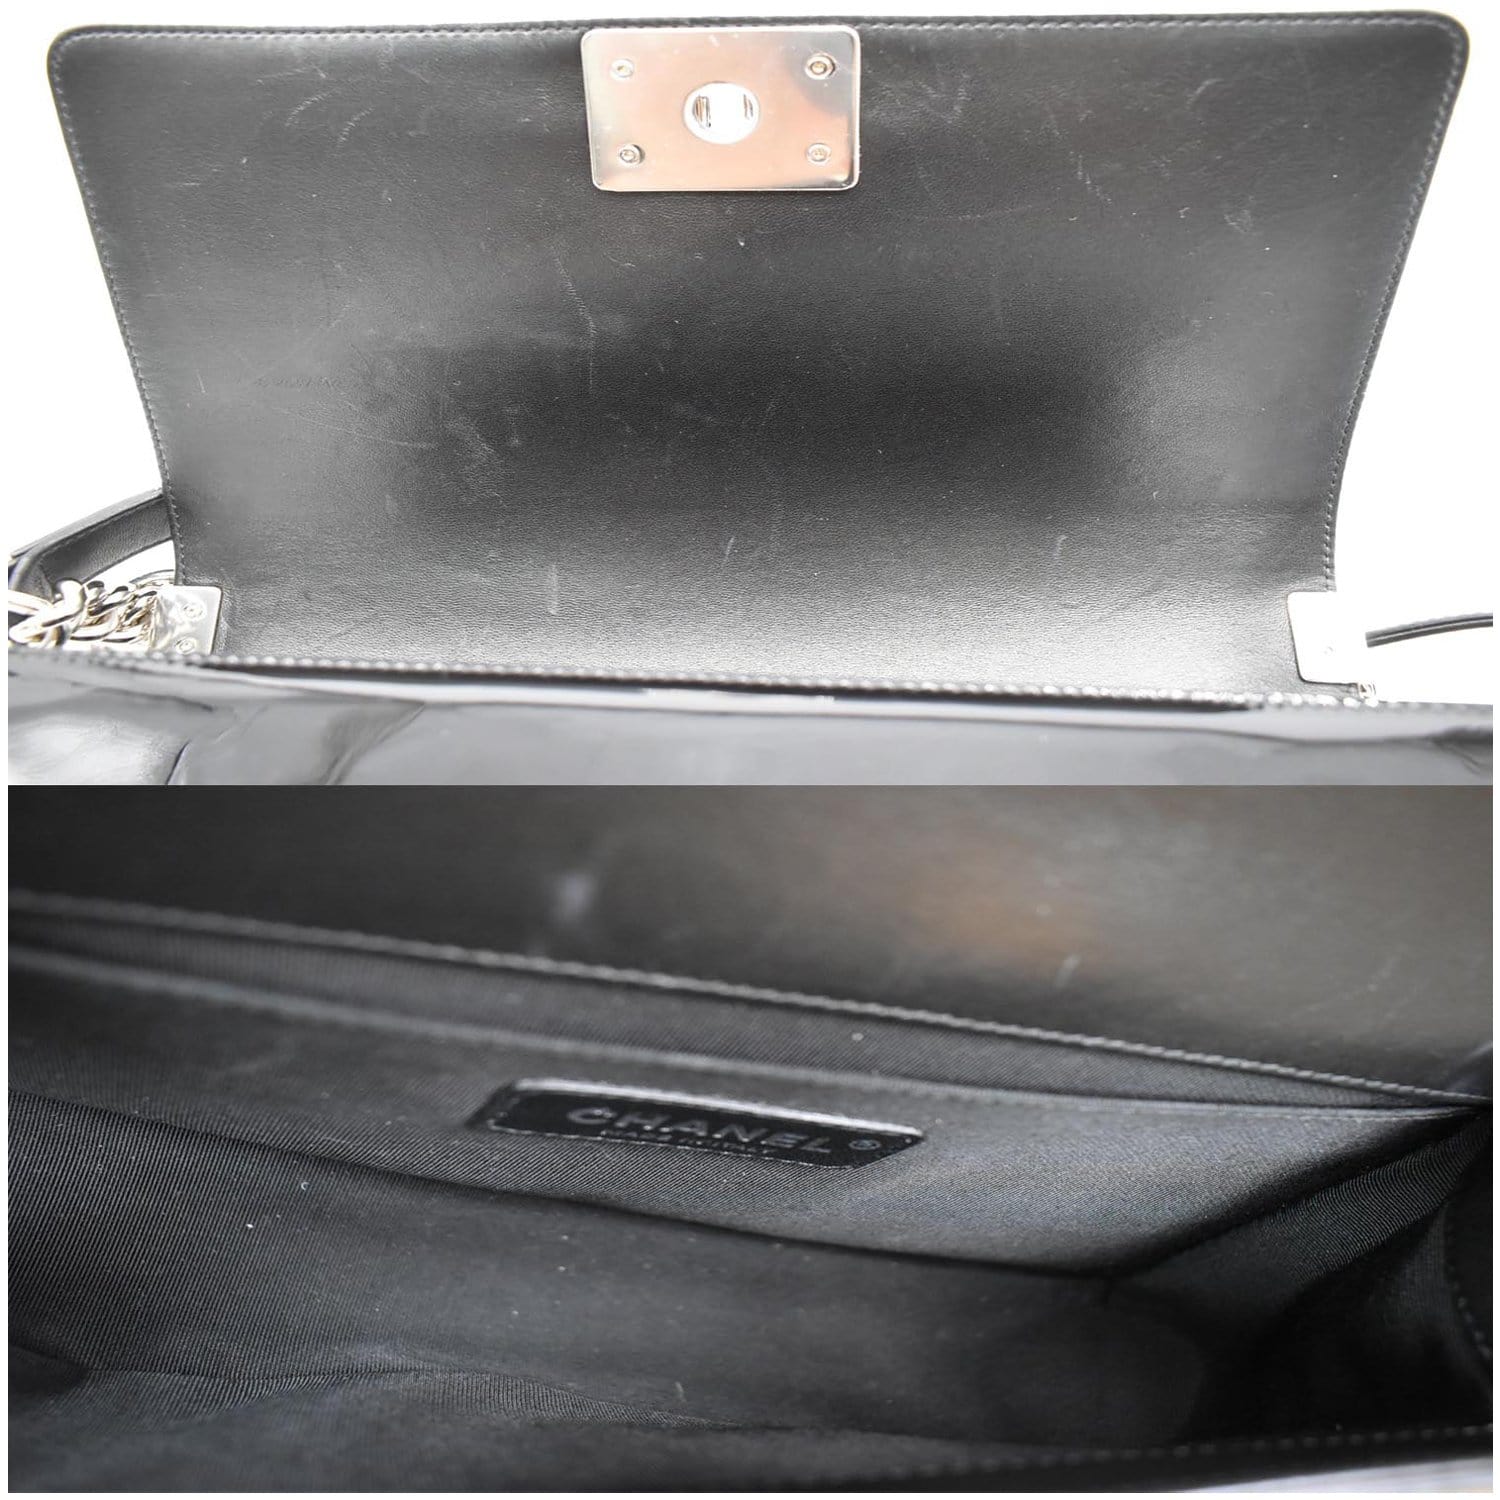 CHANEL Medium Boy Chevron Patent Glitter PVC Shoulder Bag Black